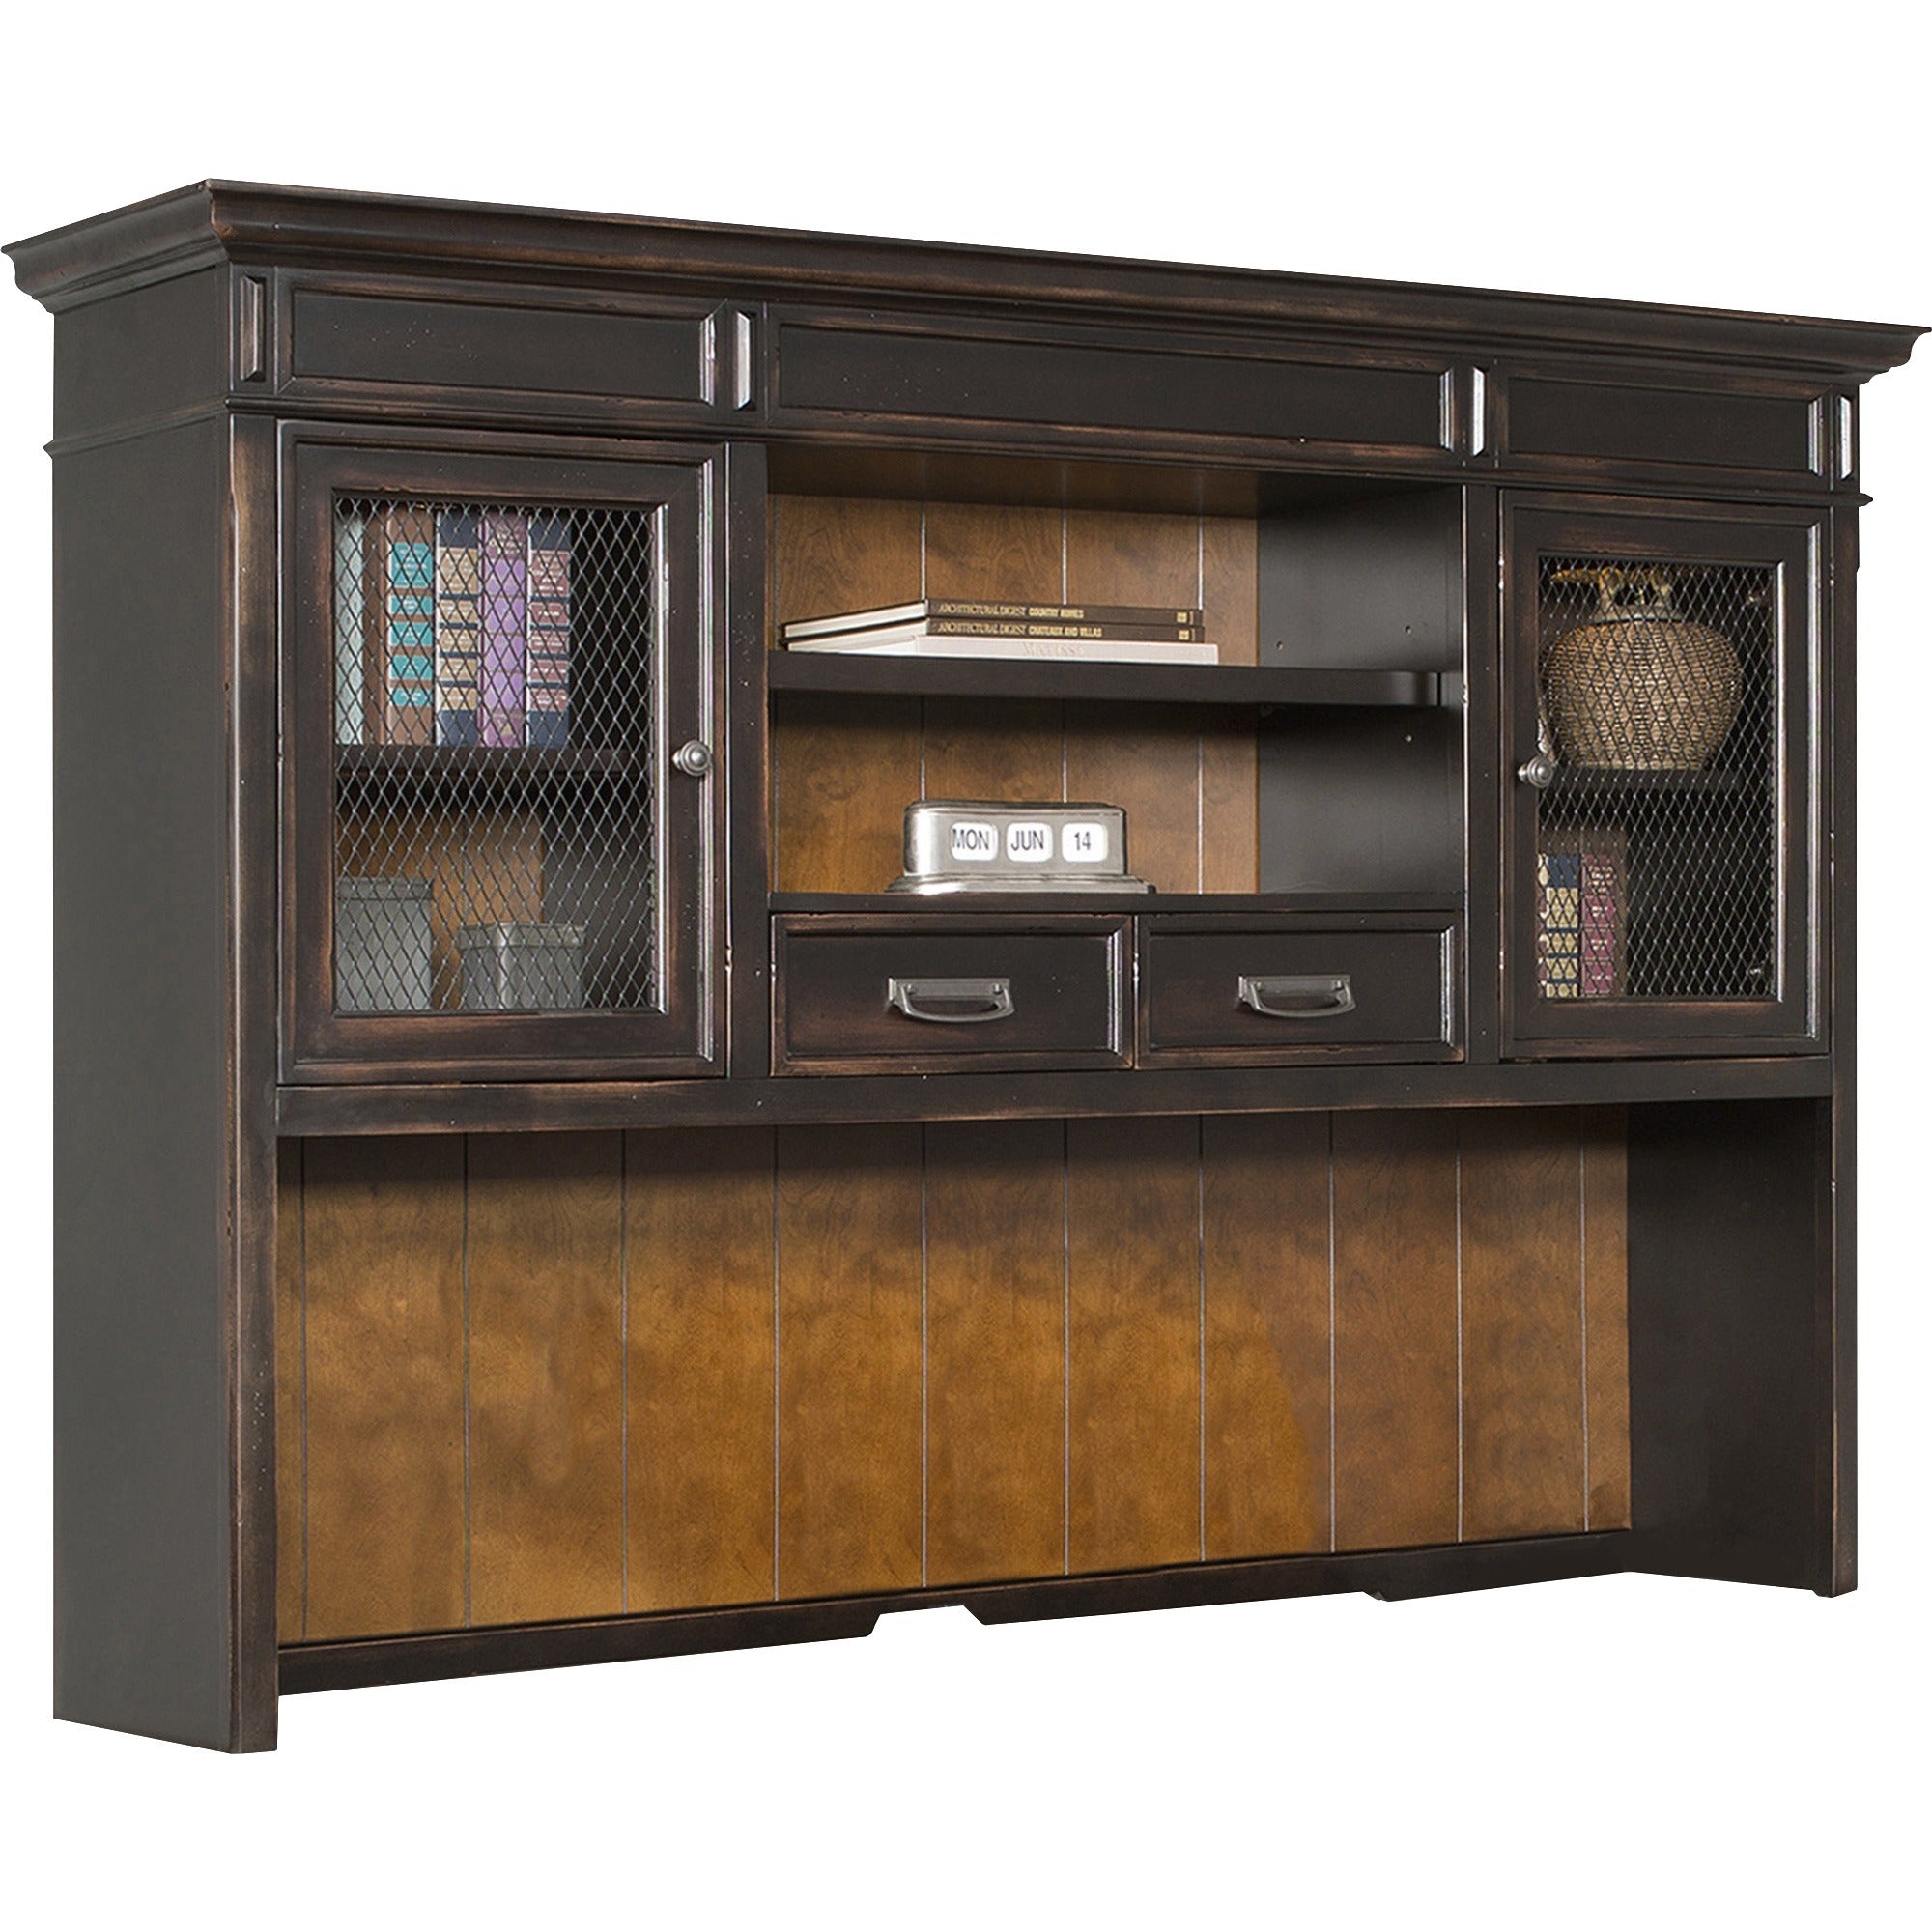 martin-hartford-hutch-705-x-1449-2-x-utility-drawers-2-doors-2-shelves-1-adjustable-shelfves-material-wood-veneer-solid-wood-finish-vintage-black-touch-lighting-for-home-office-living-area_mrtimhf682 - 1